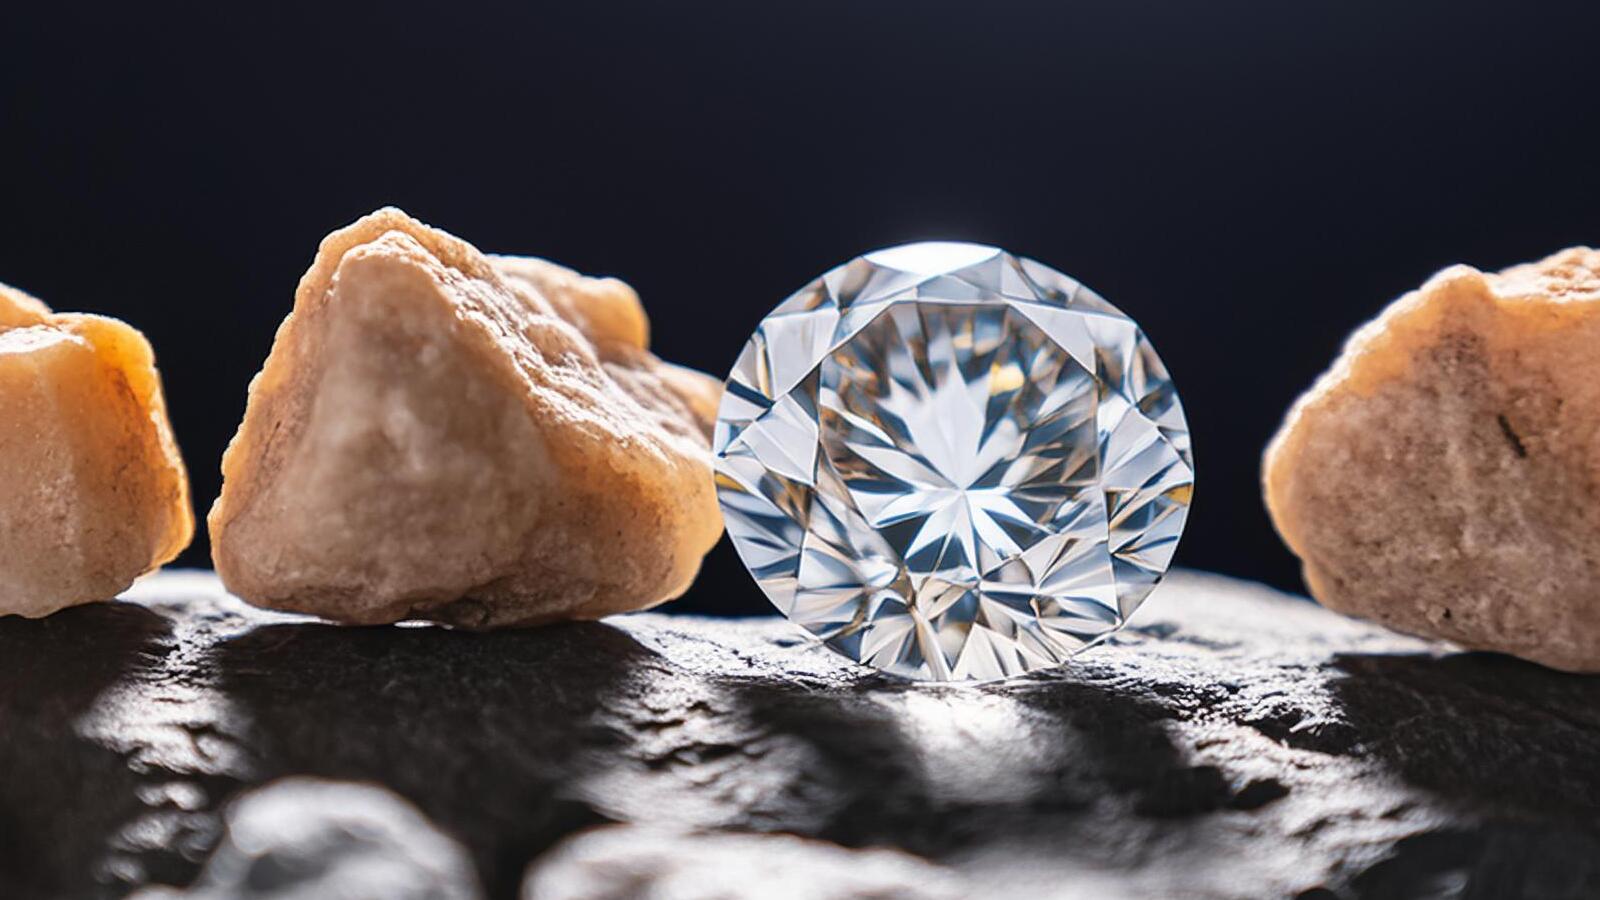 Diamond among pebbles